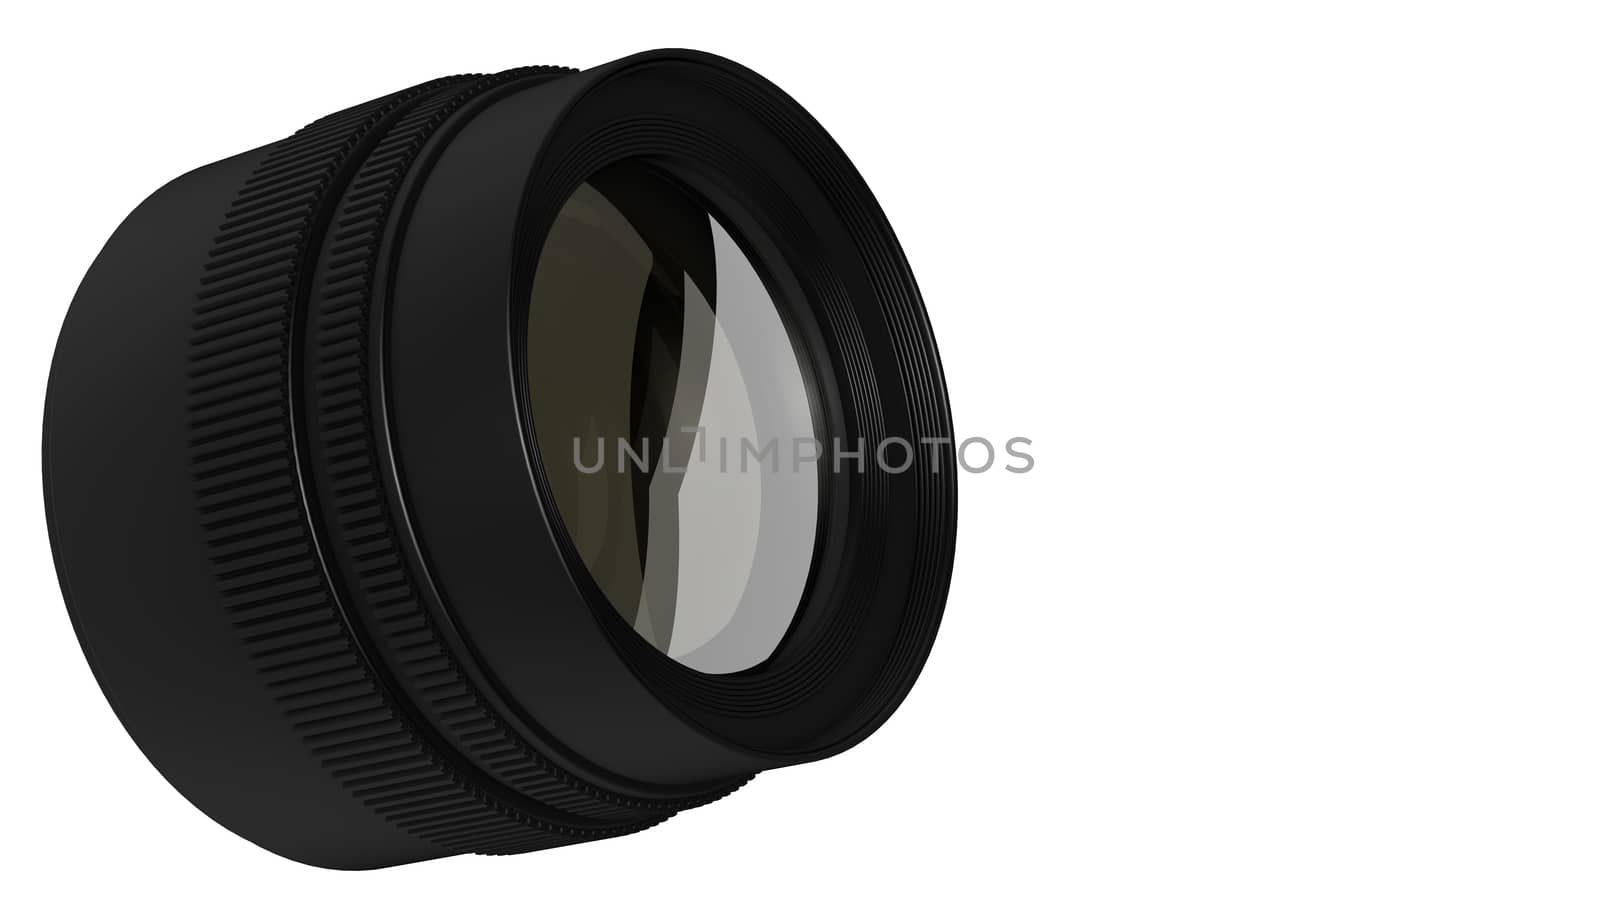 lens for Camera by alexx60